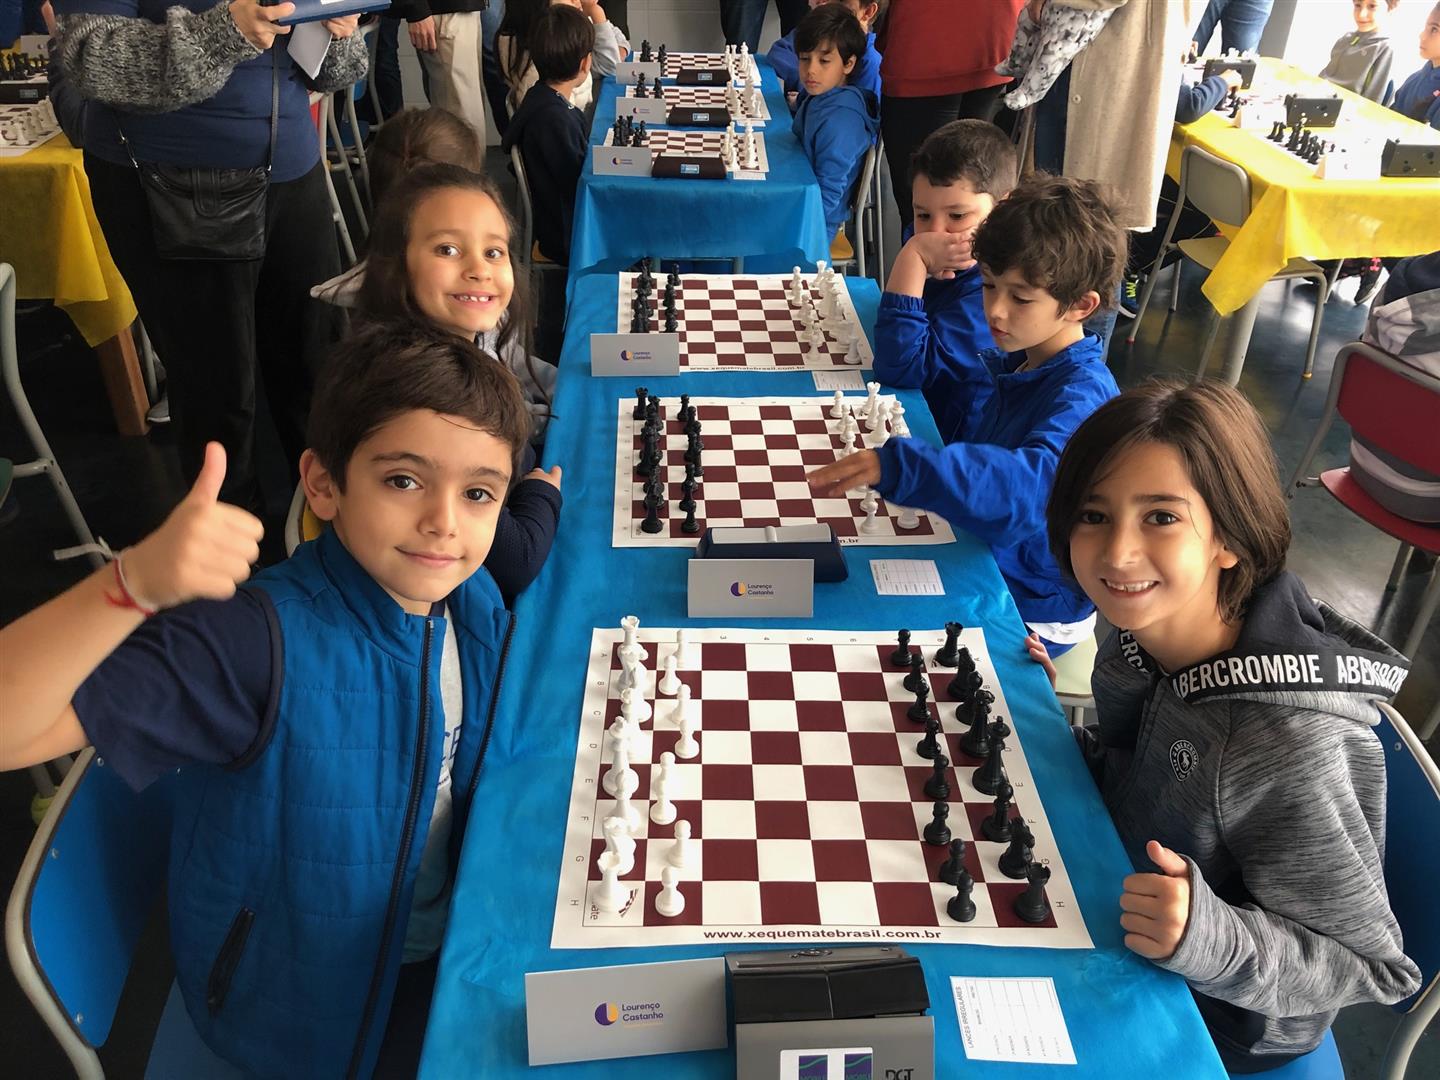 II Torneio de Xadrez – Escola Divina Providência